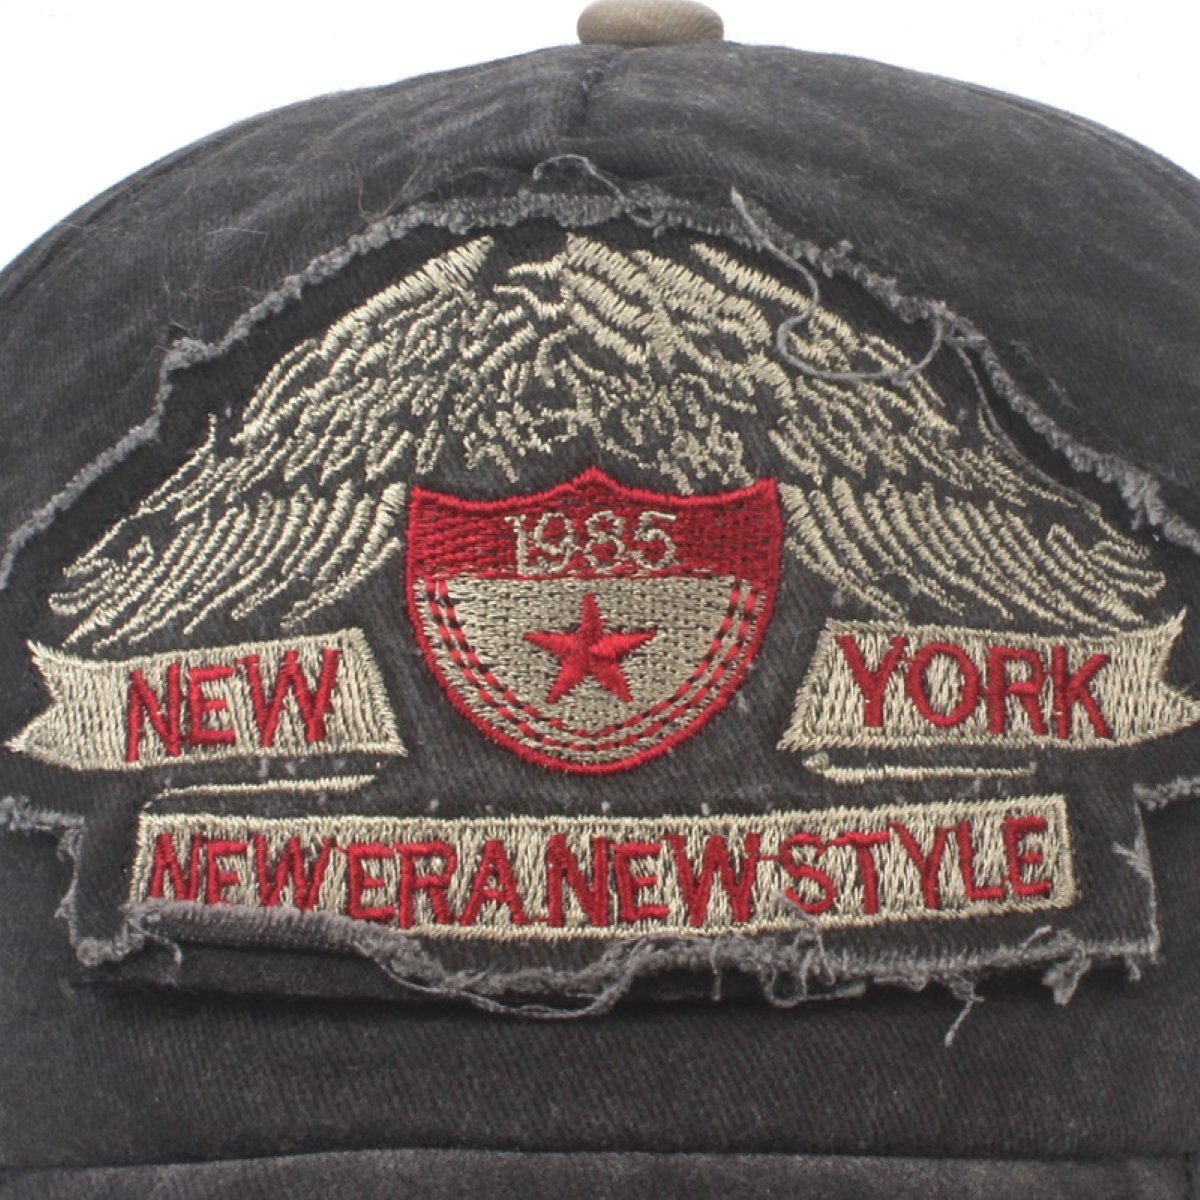 schwarz Sporty mit Kappe Baseball Belüftungslöchern Style Washed Used Look Cap Retro Vintage Cap Eagle